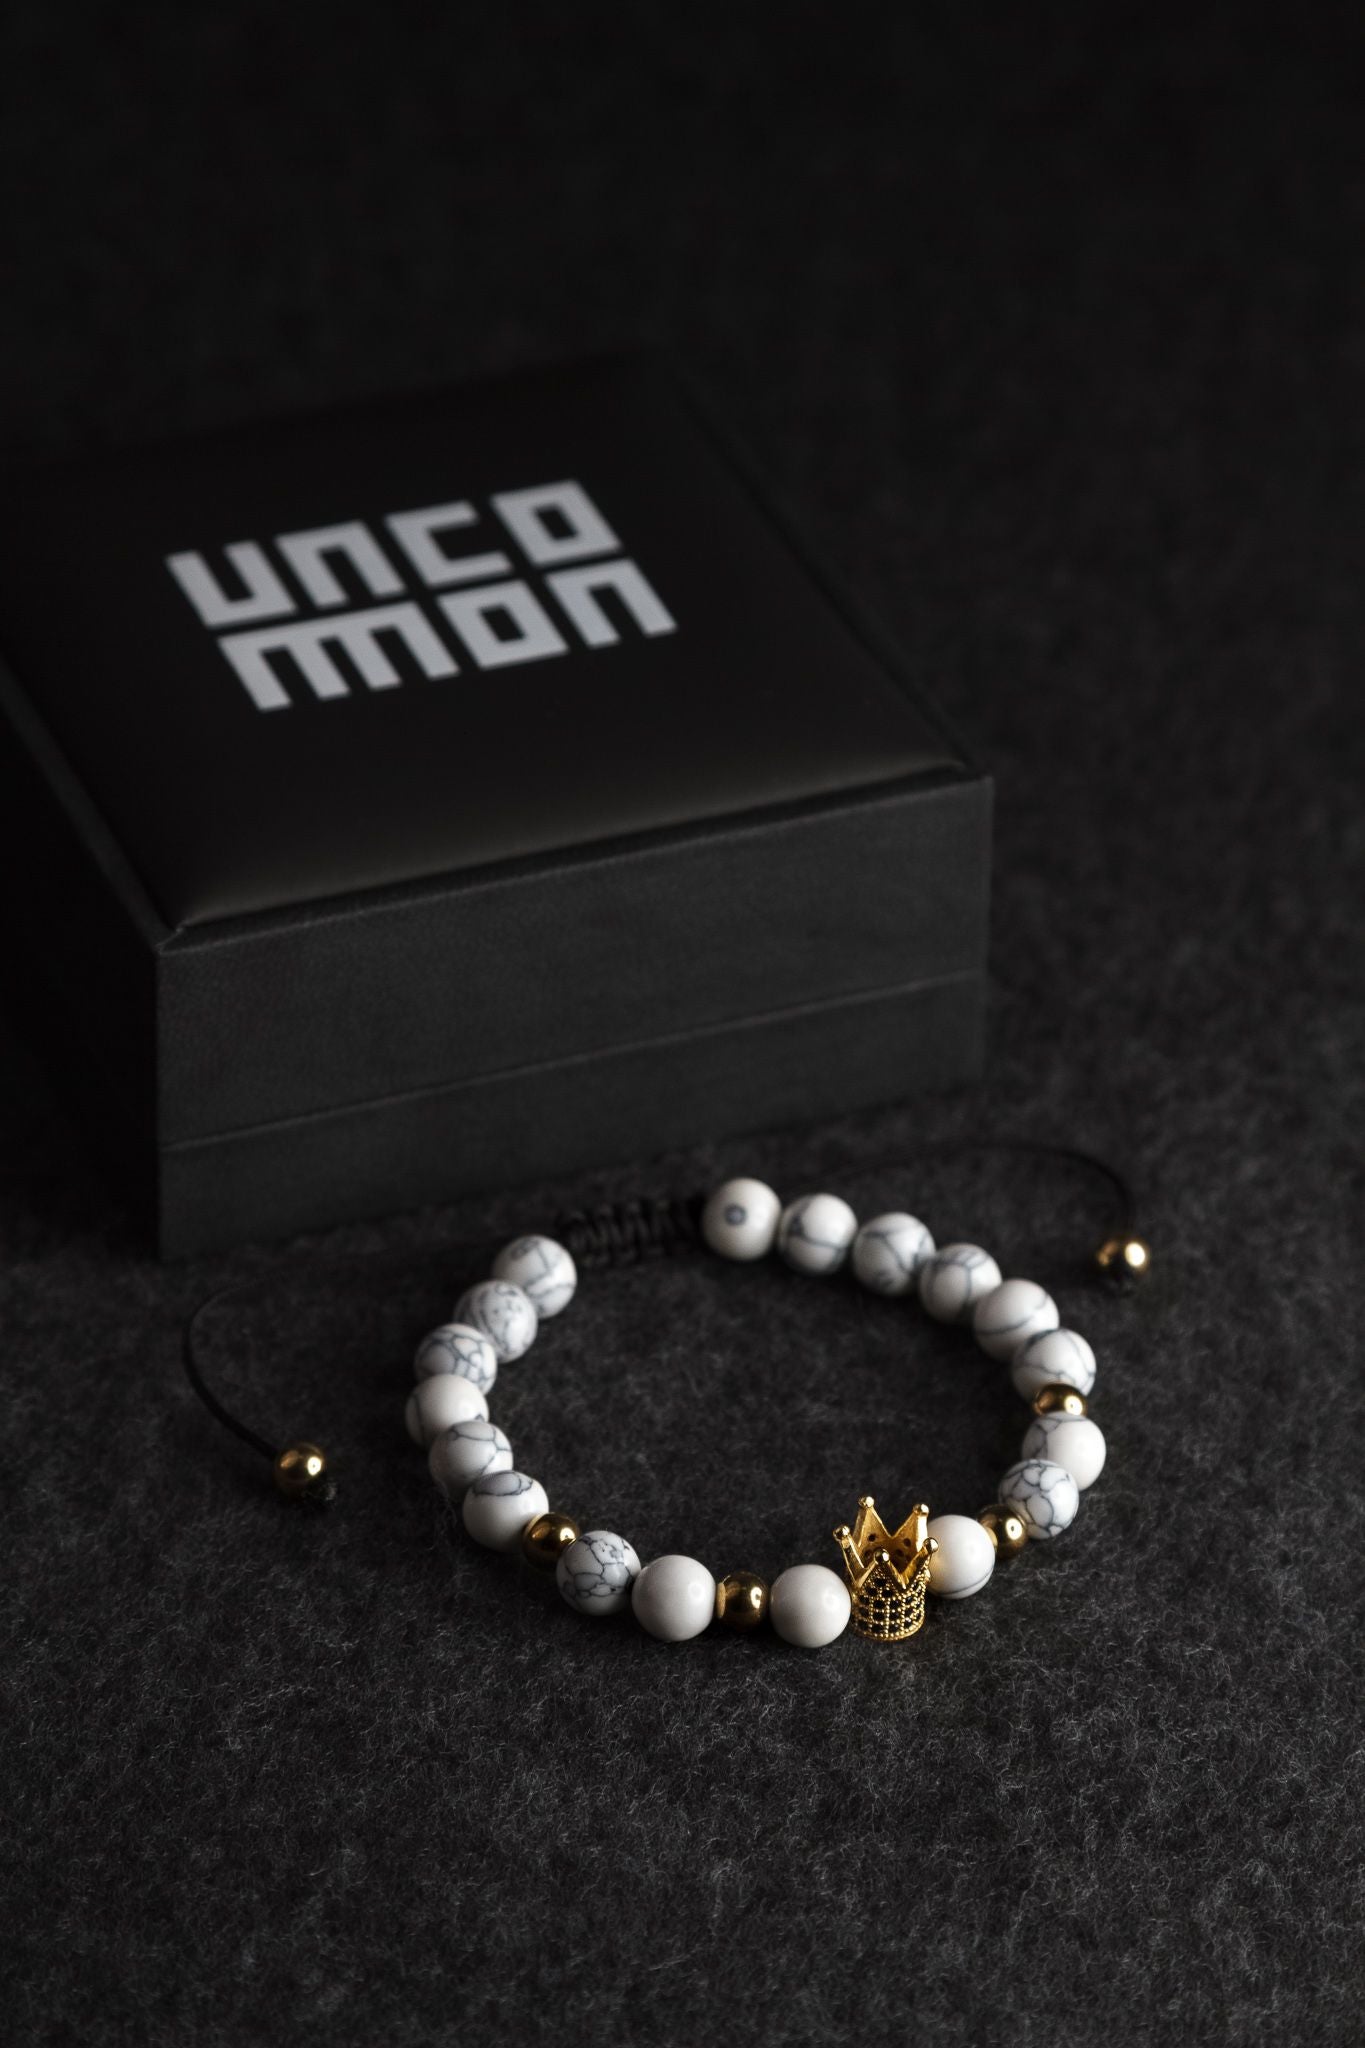 UNCOMMON Men's Beads Bracelet One Gold Jeweled Crown Charm White Jasper Beads